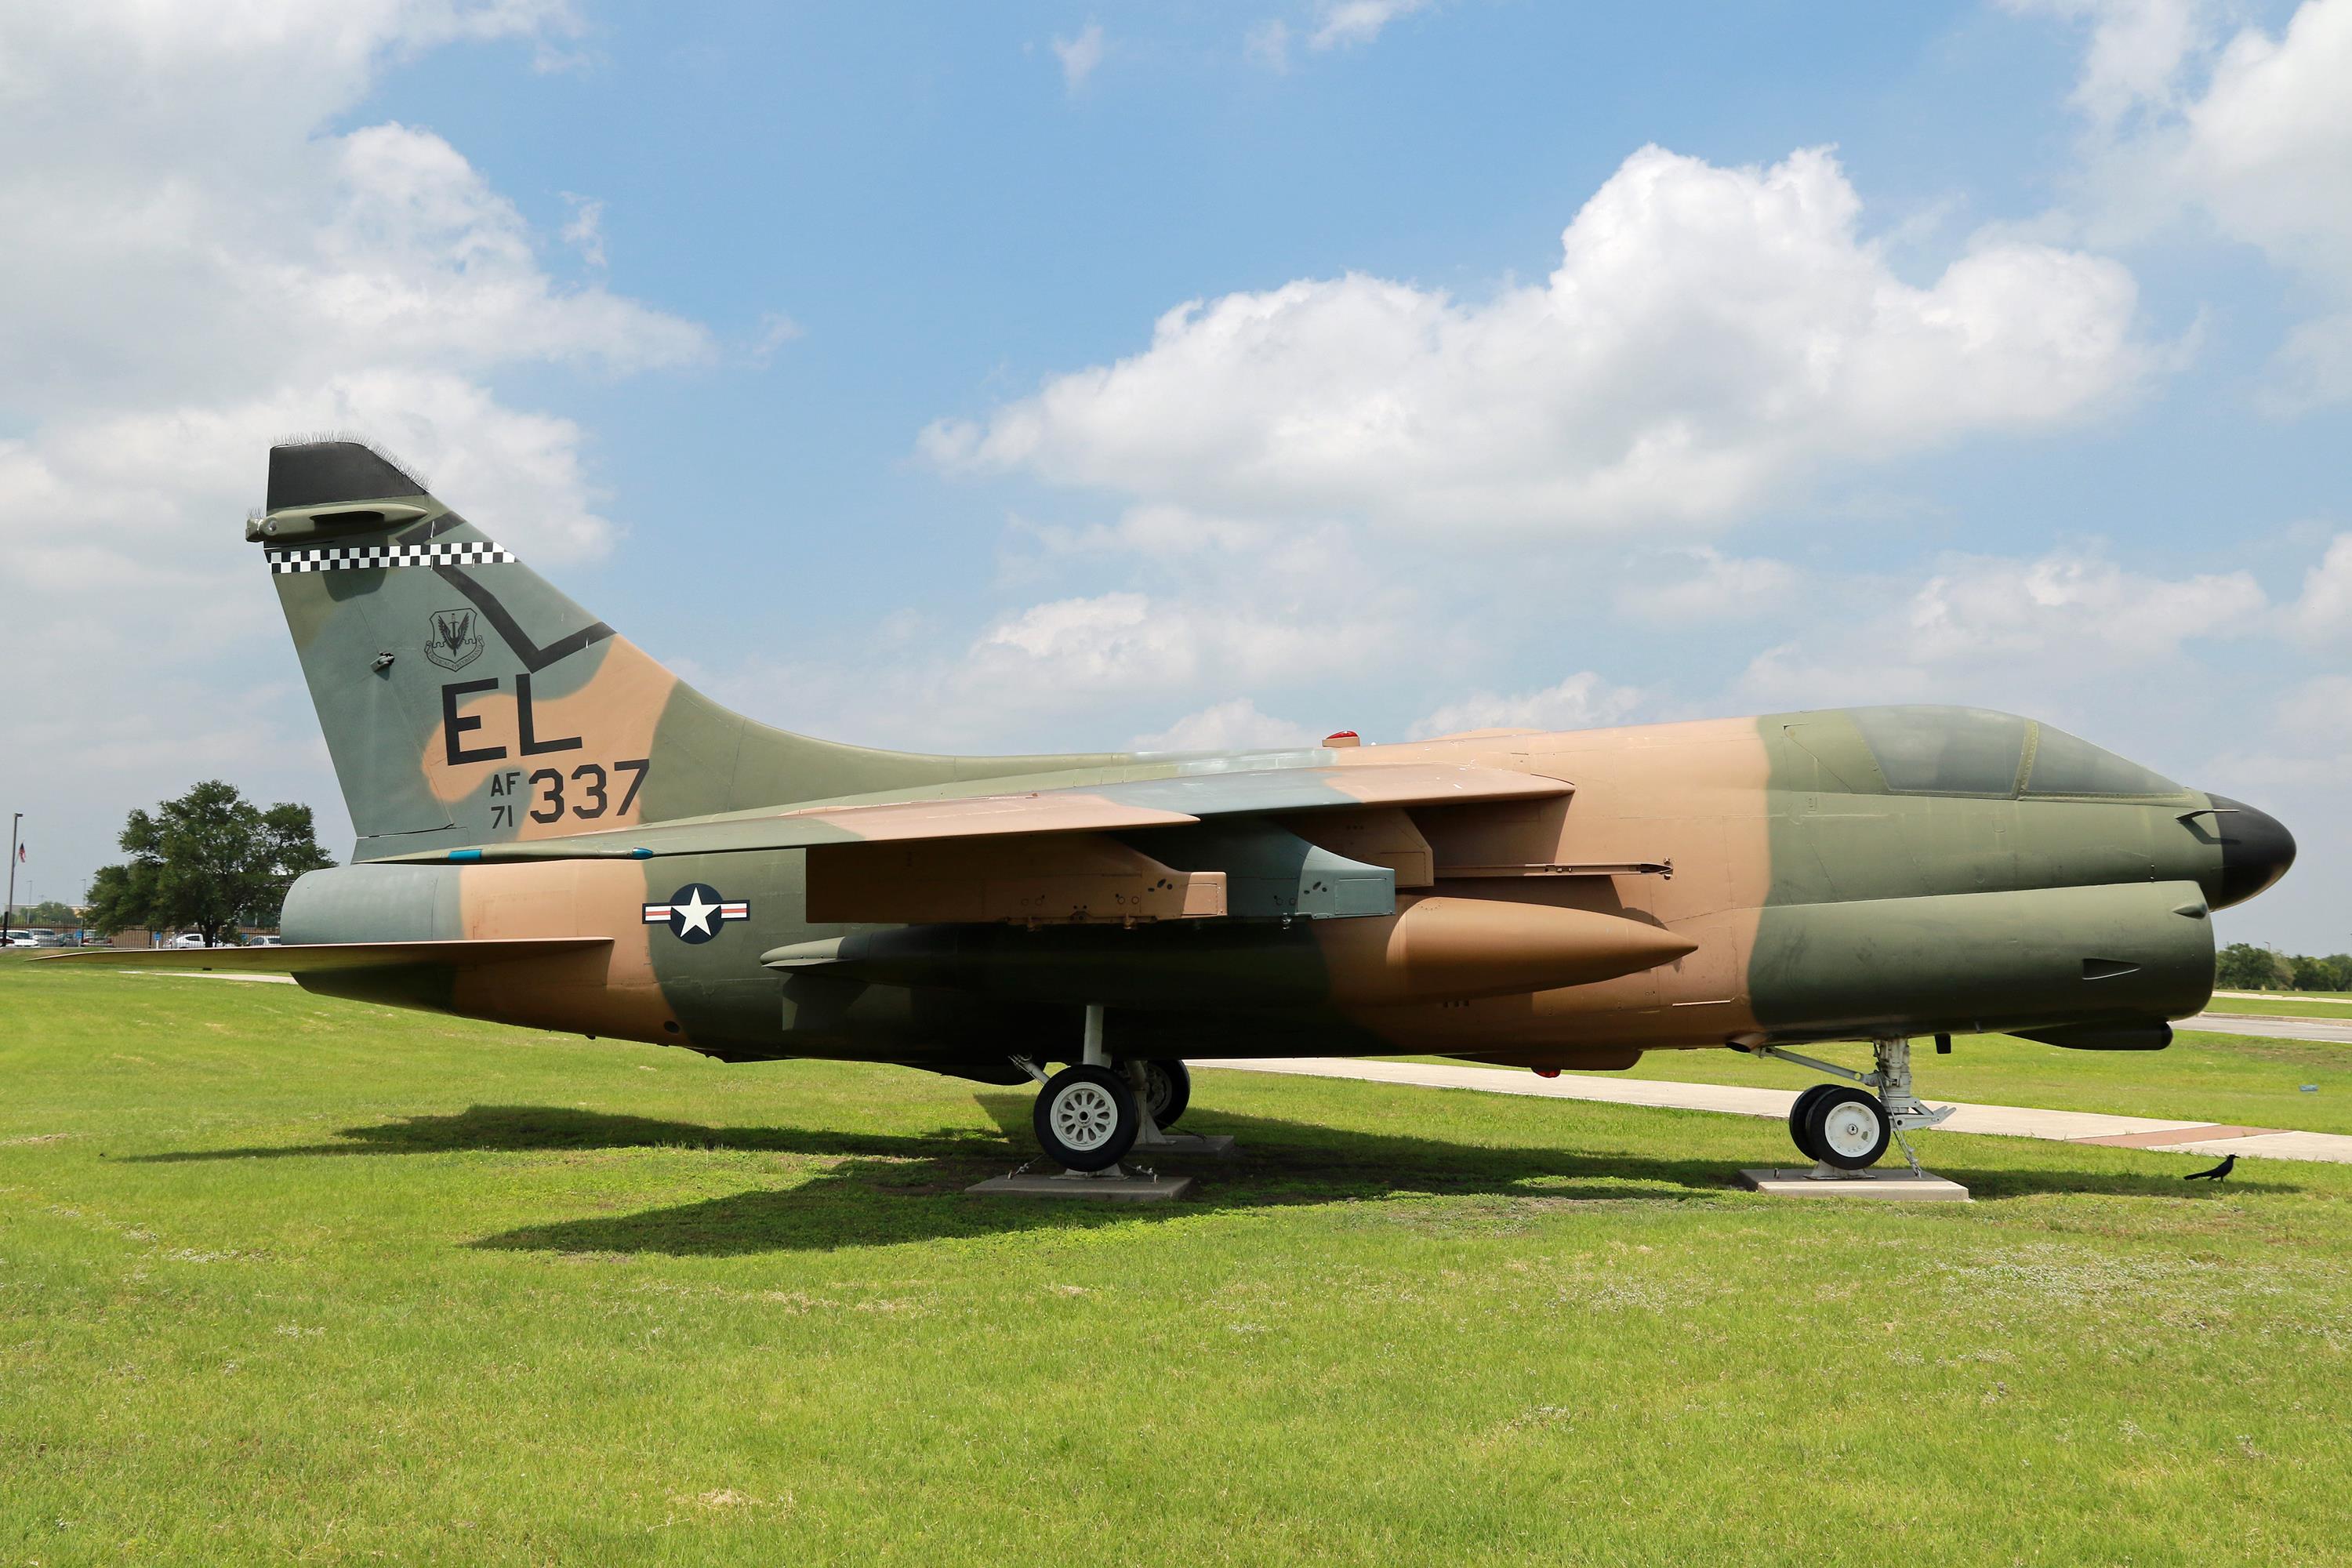 USAF Airman Heritage Museum – Lackland AFB (Pt2)